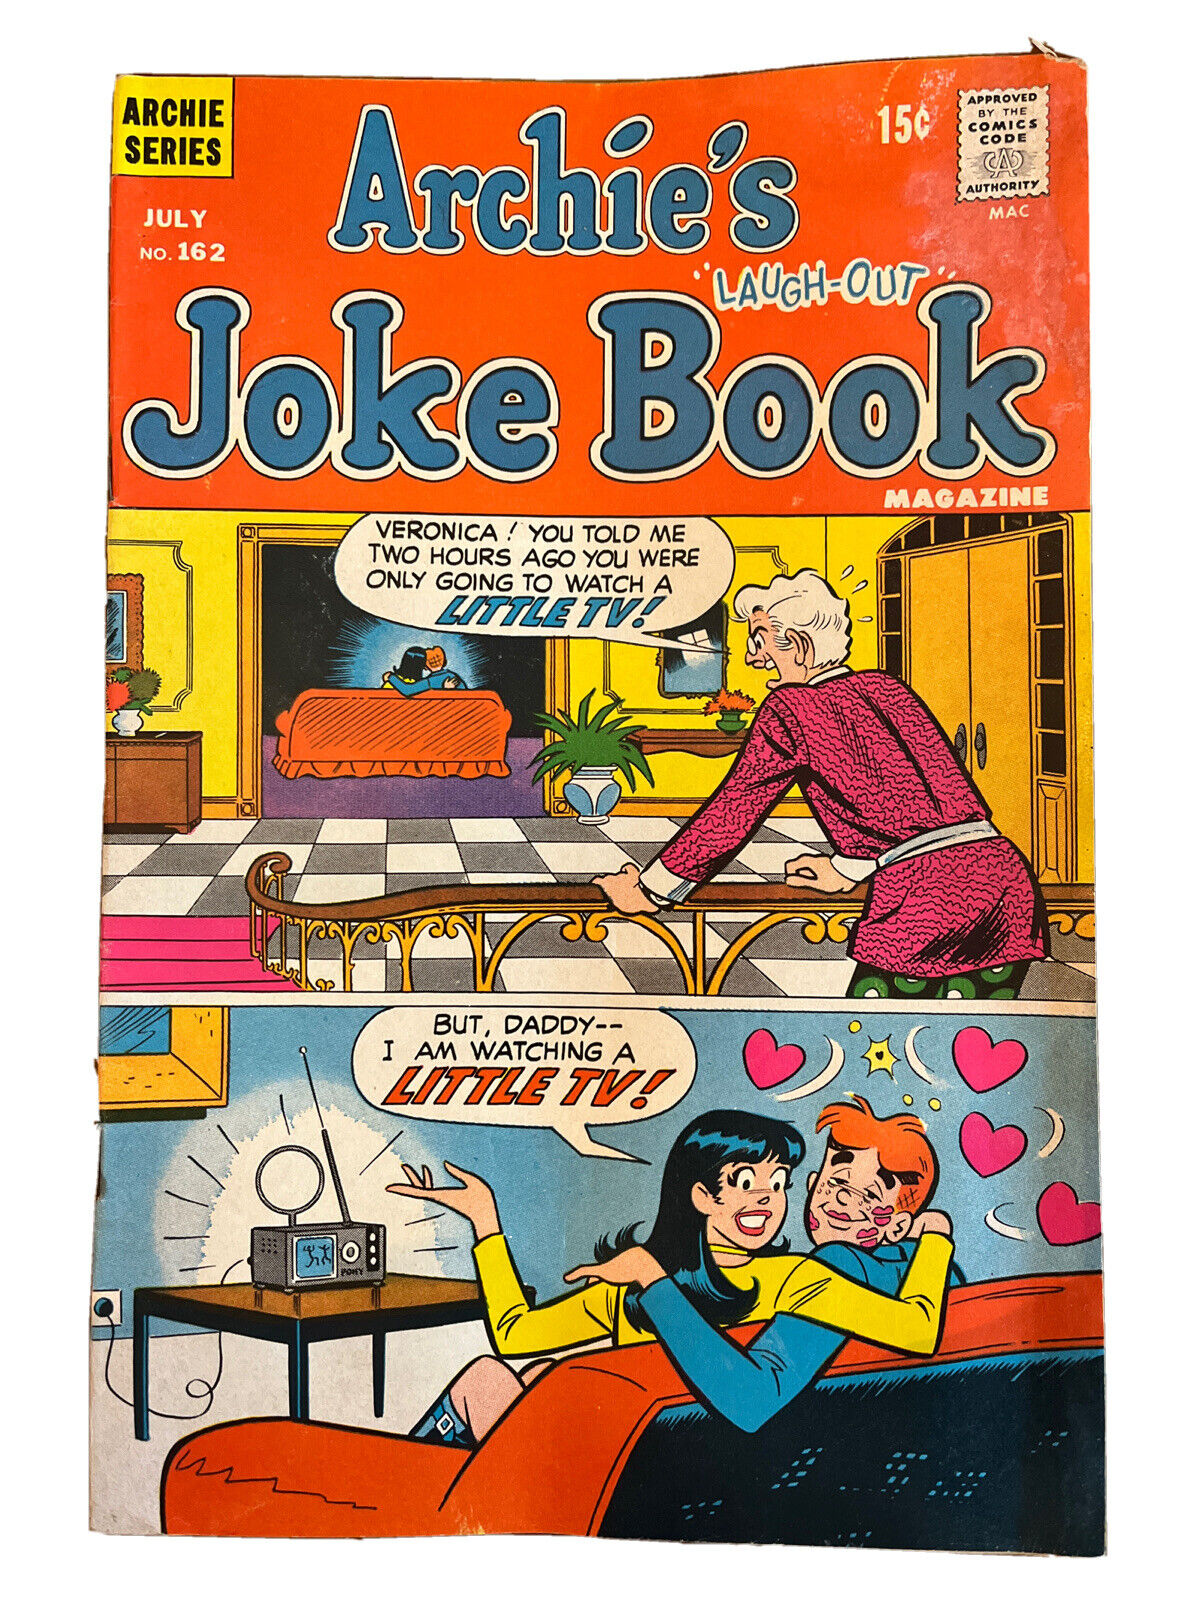 Archie\'s Laugh-Out Jokebook. #162. “Archie Series,” July 1971.